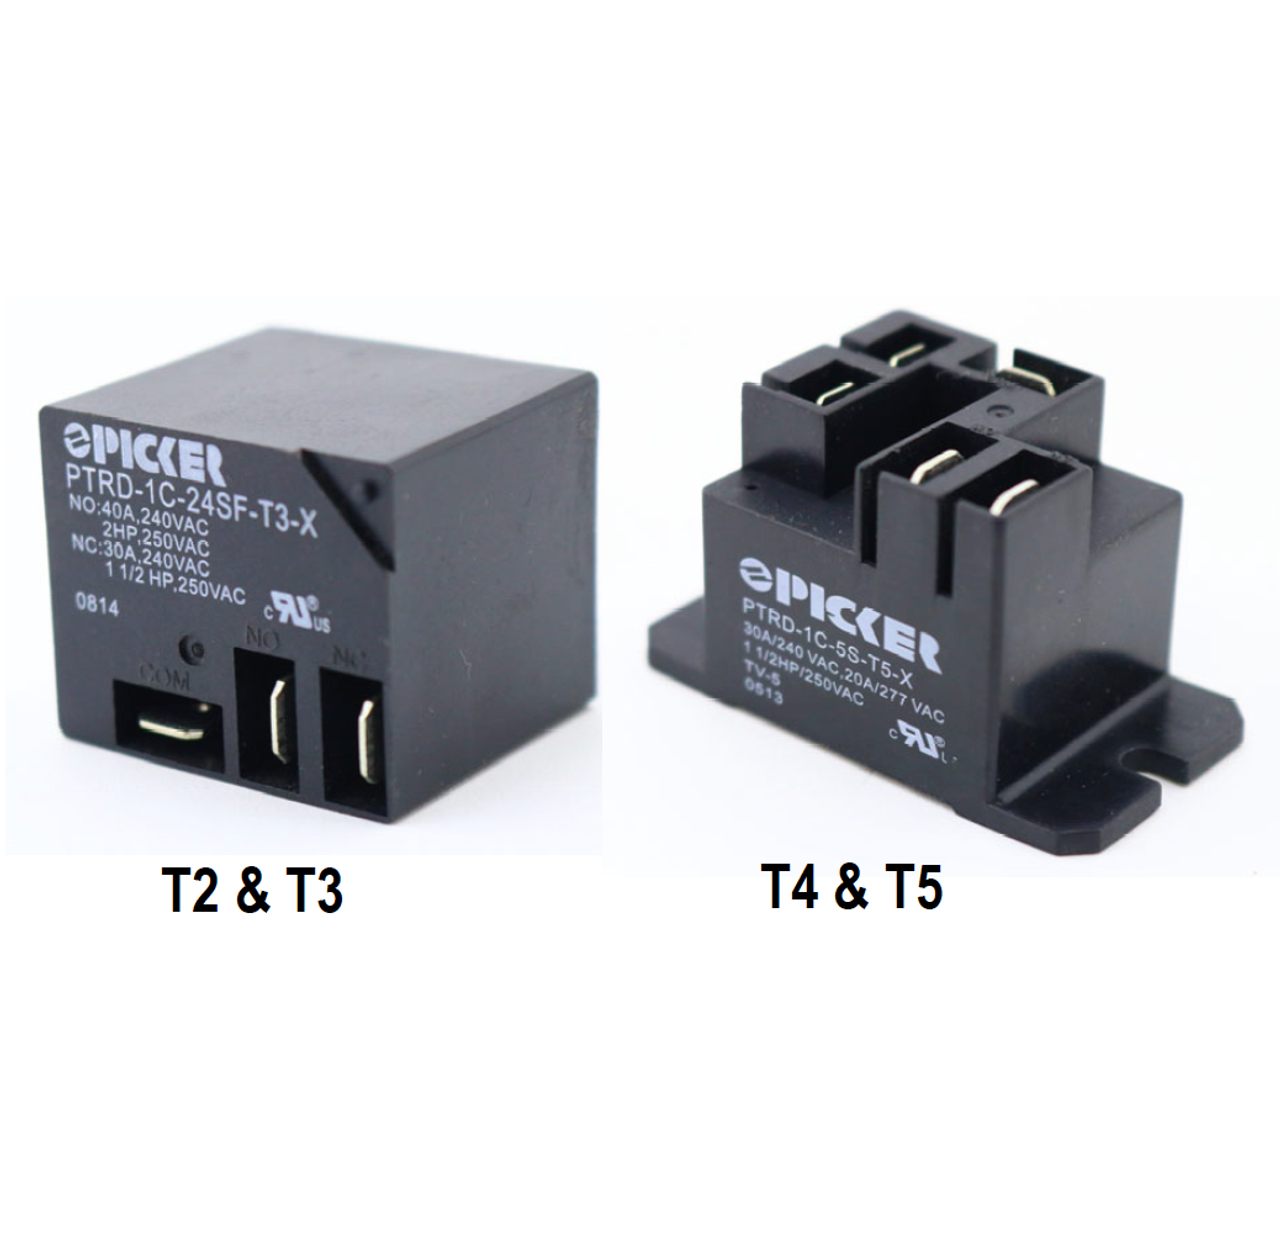 Picker PTRD-1A-9ST-T5-X-A0.6G Power Relays